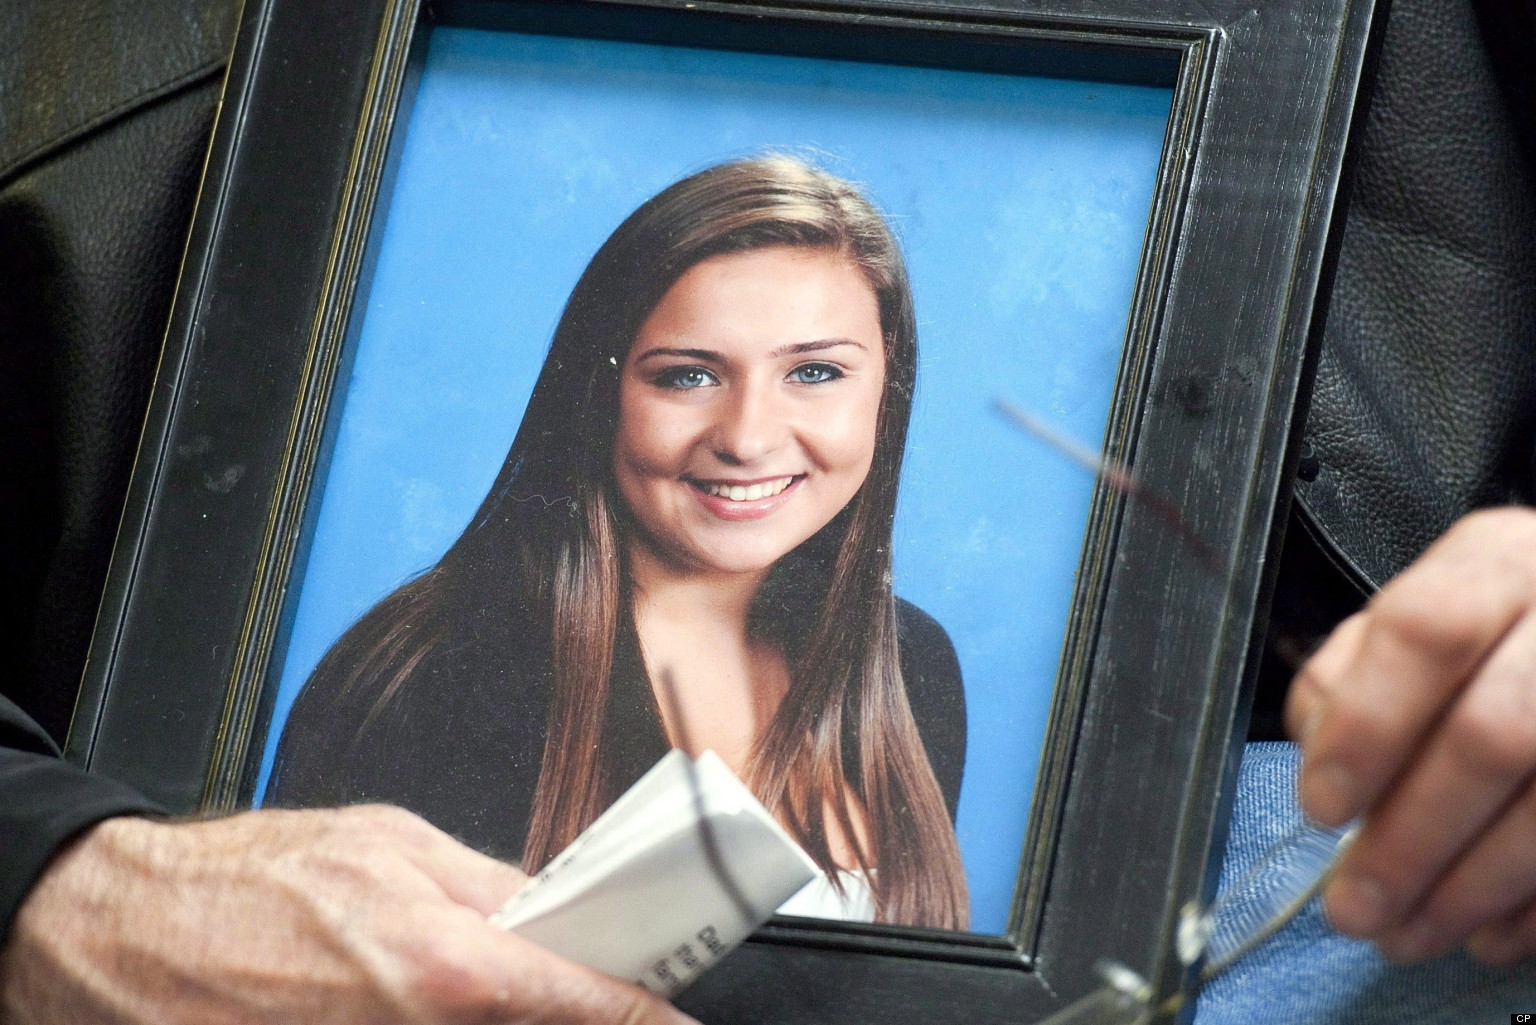 Man Who Brutally Killed Delta Teen Laura Szendrei Back In Court